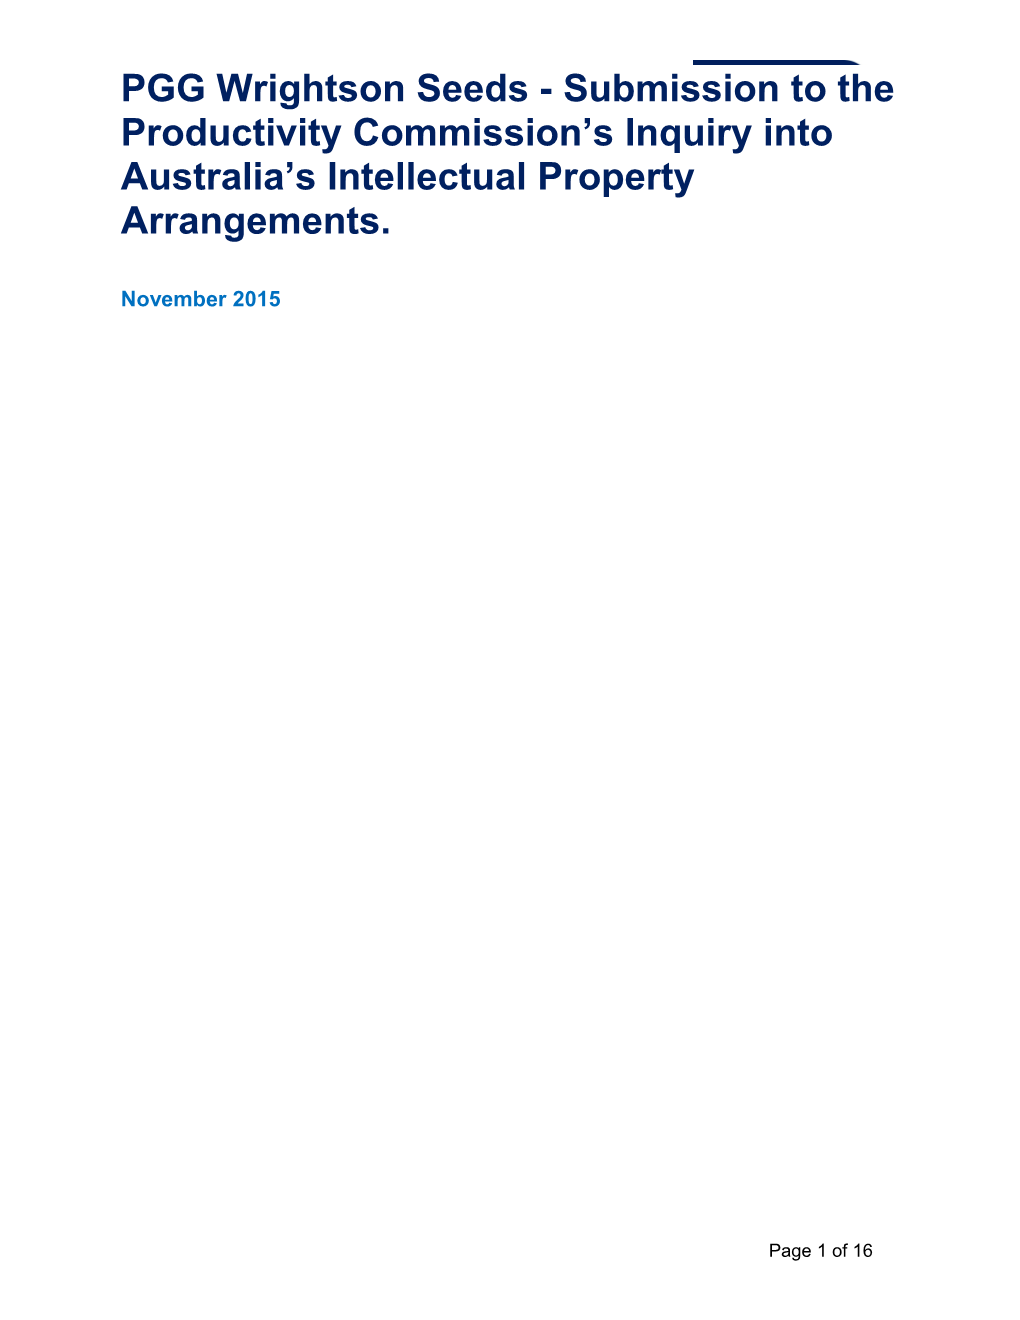 Submission 82 - PGG Wrightson Seeds (Australia) Ltd - Intellectual Property Arrangements